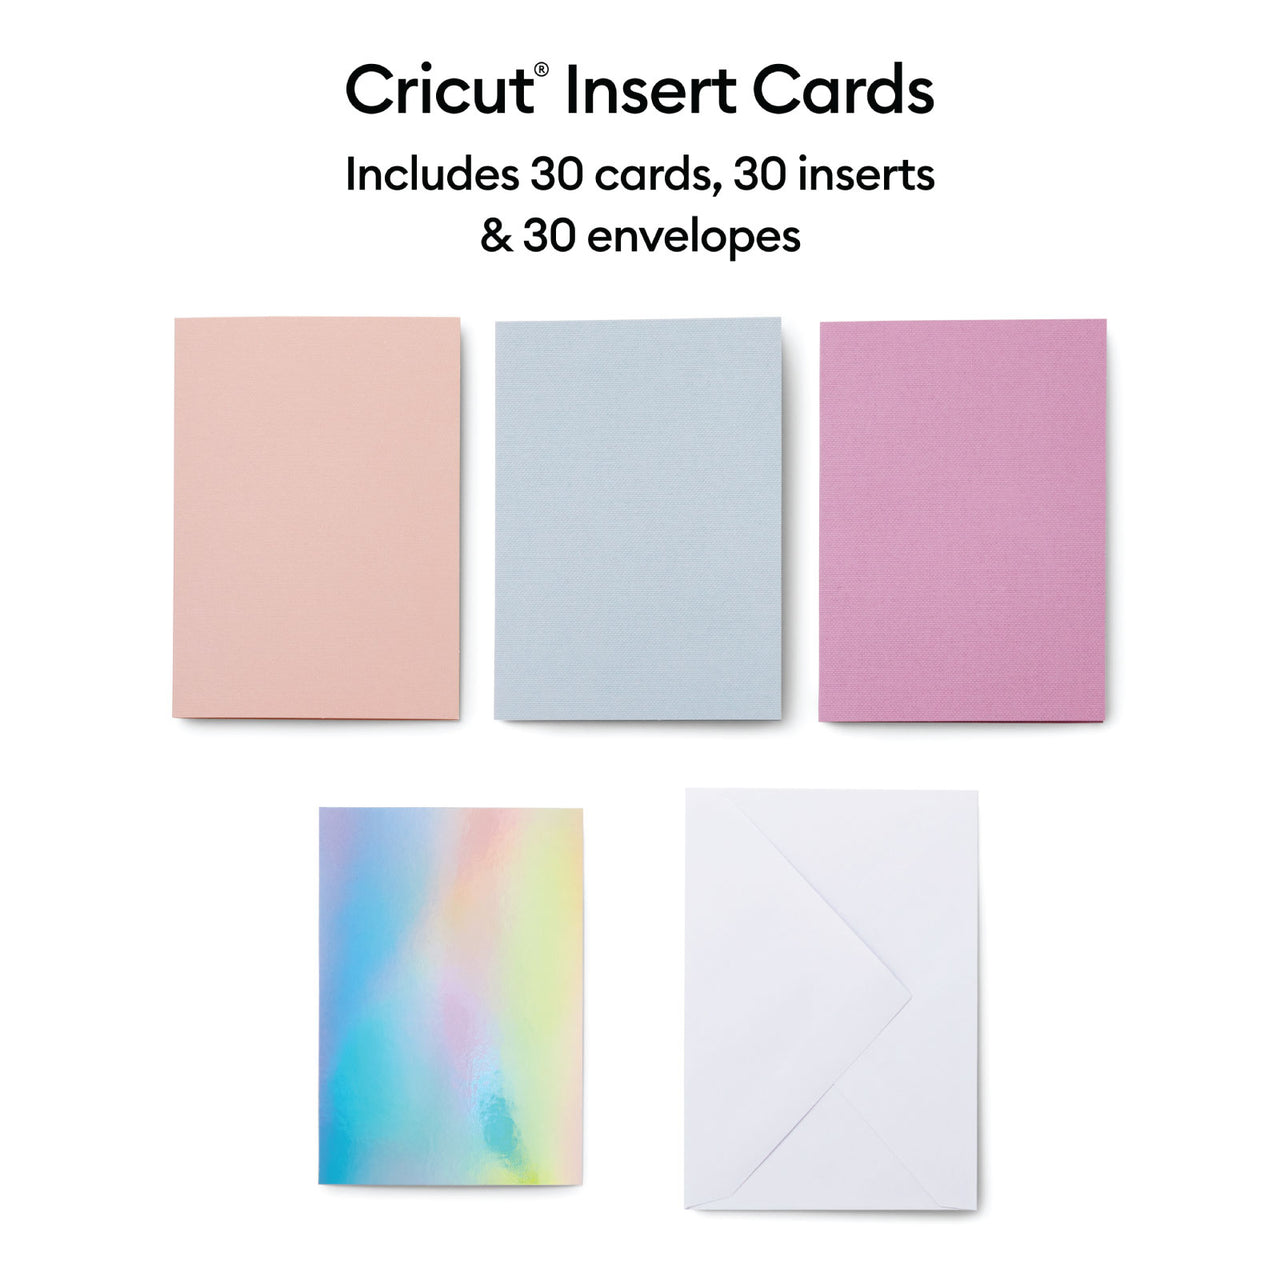 Cricut Insert Cards, Princess Sampler - R40 30 ct - Damaged Package